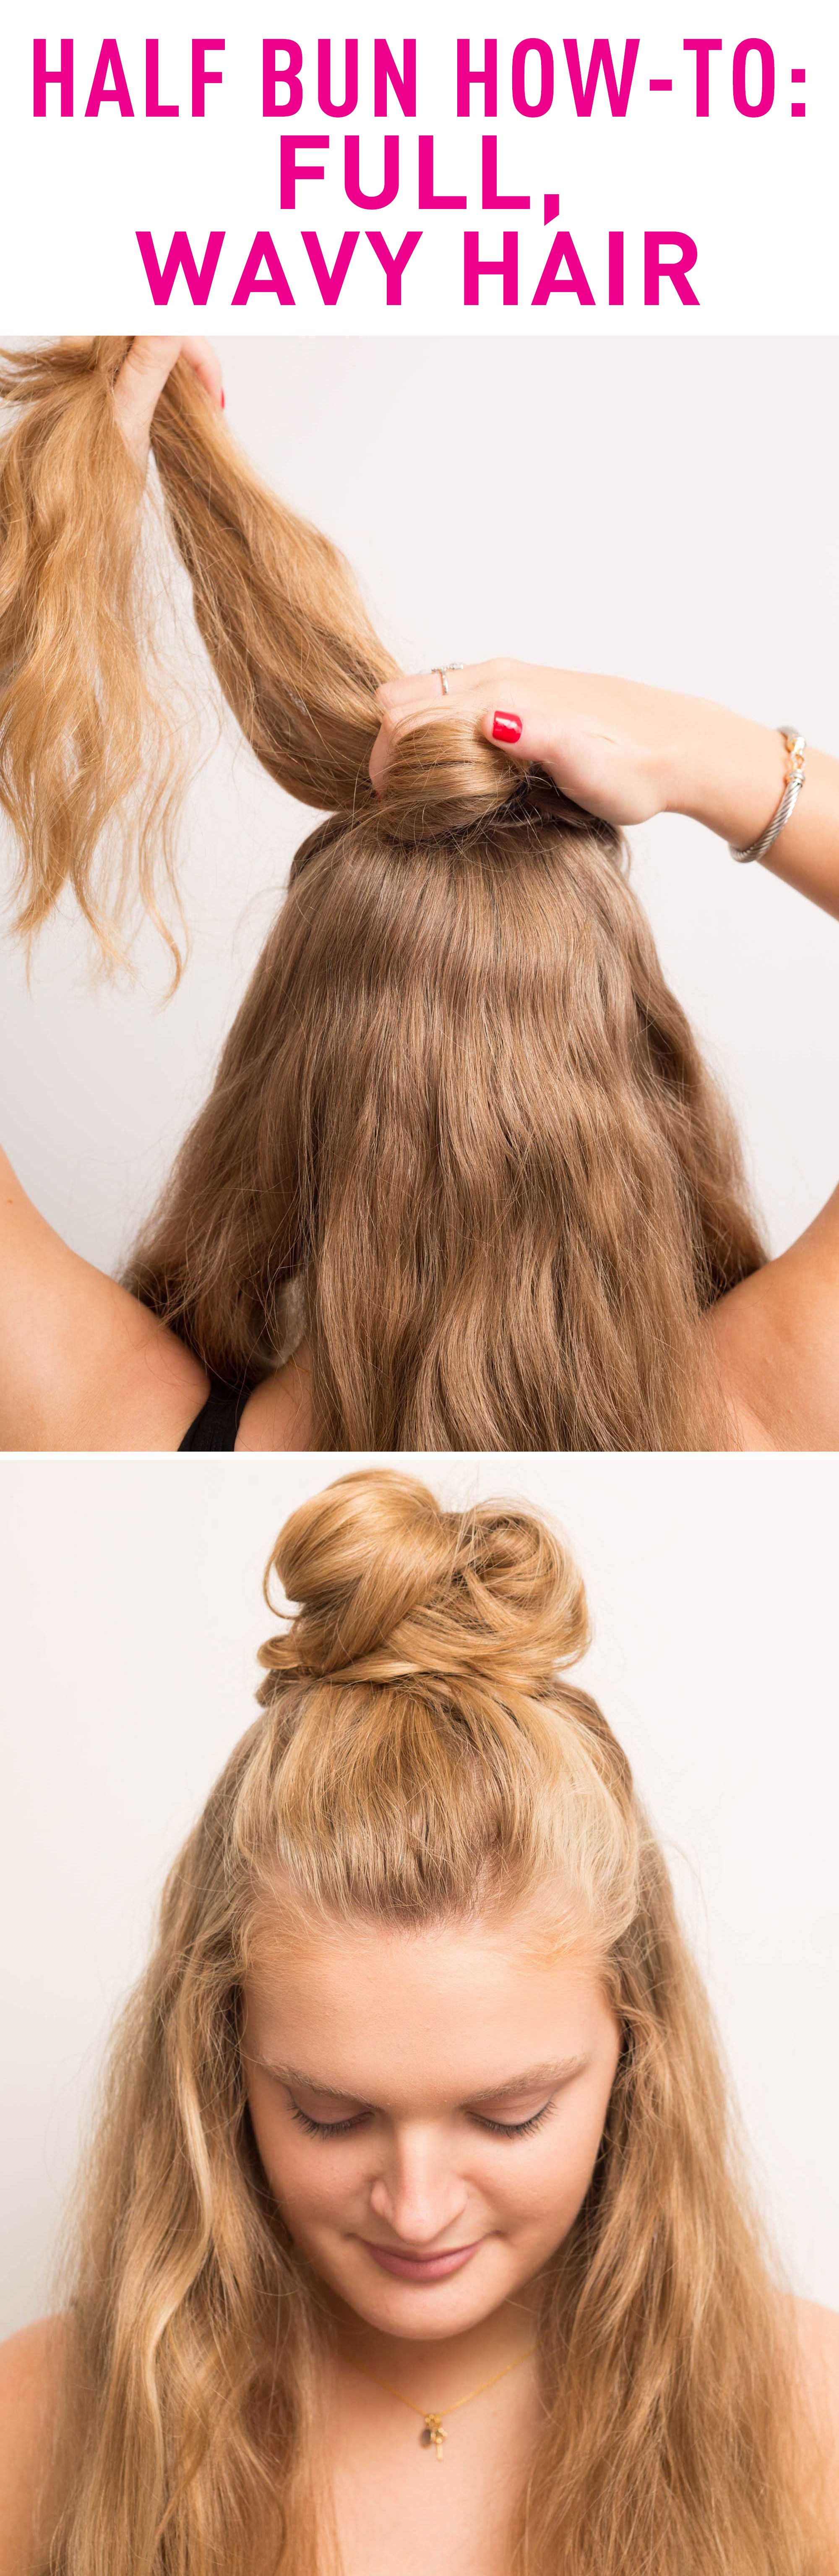 Low Bun Hairstyle Ideas for Brides | Bun hairstyles, Messy hairstyles, Low bun  hairstyles